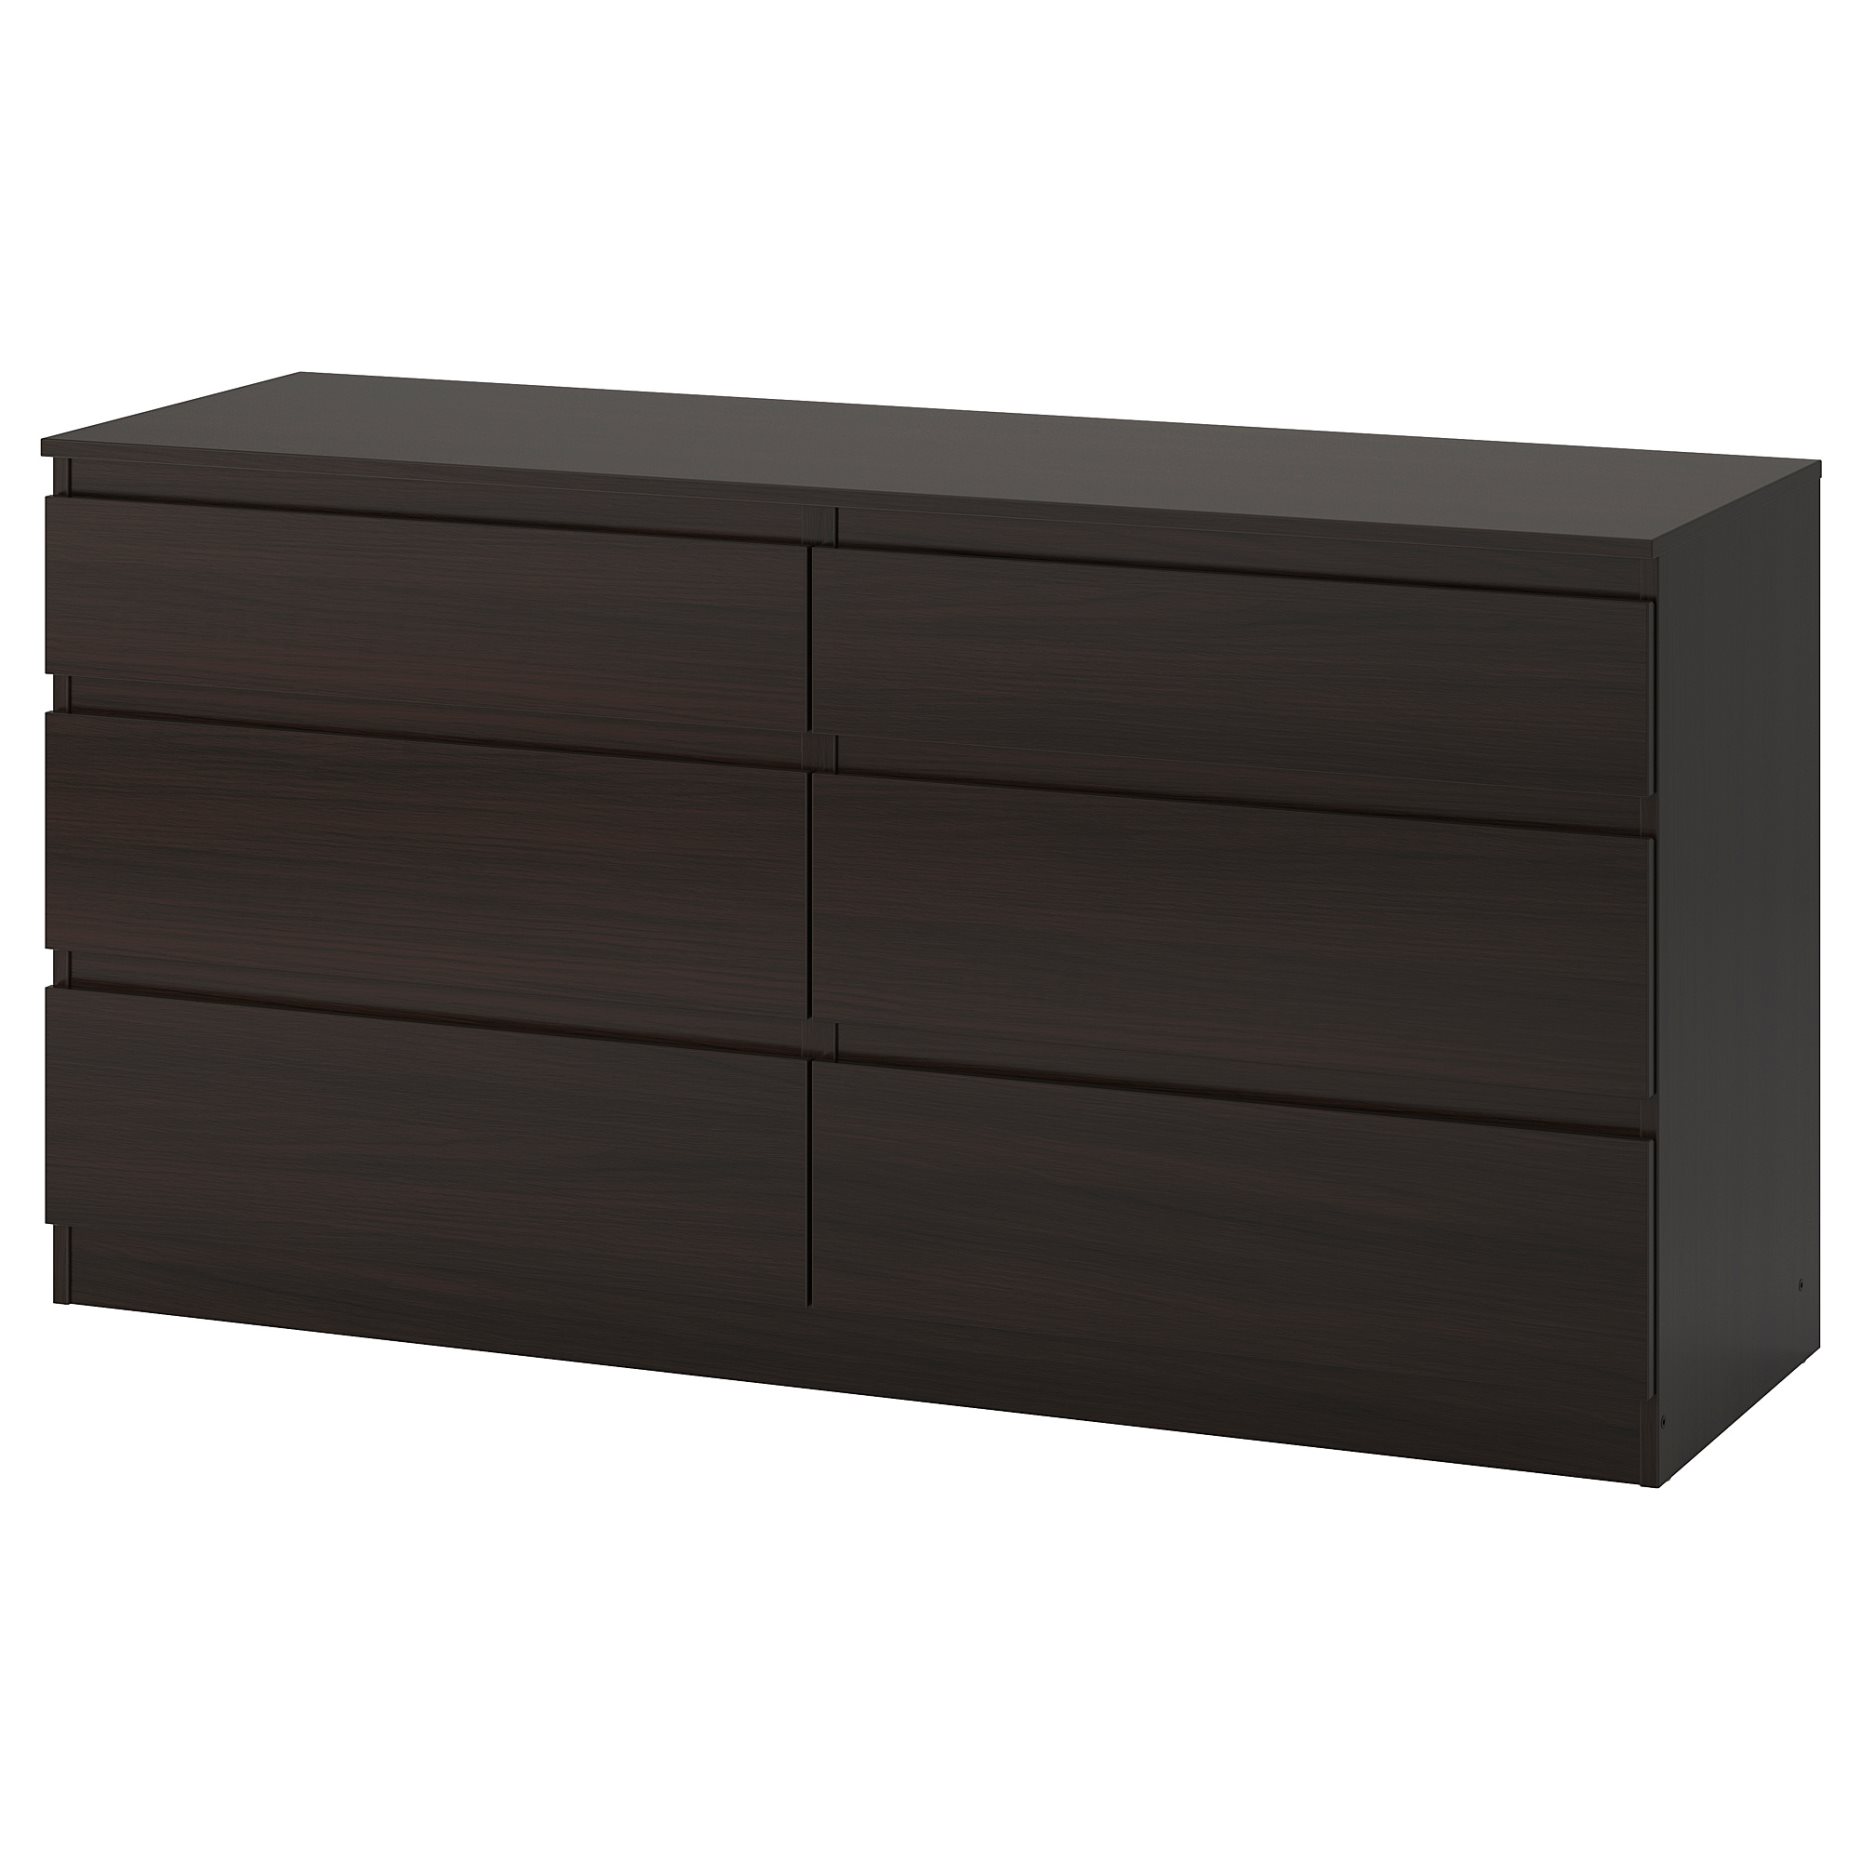 KULLEN, chest of 6 drawers, 140x72 cm, 003.092.35